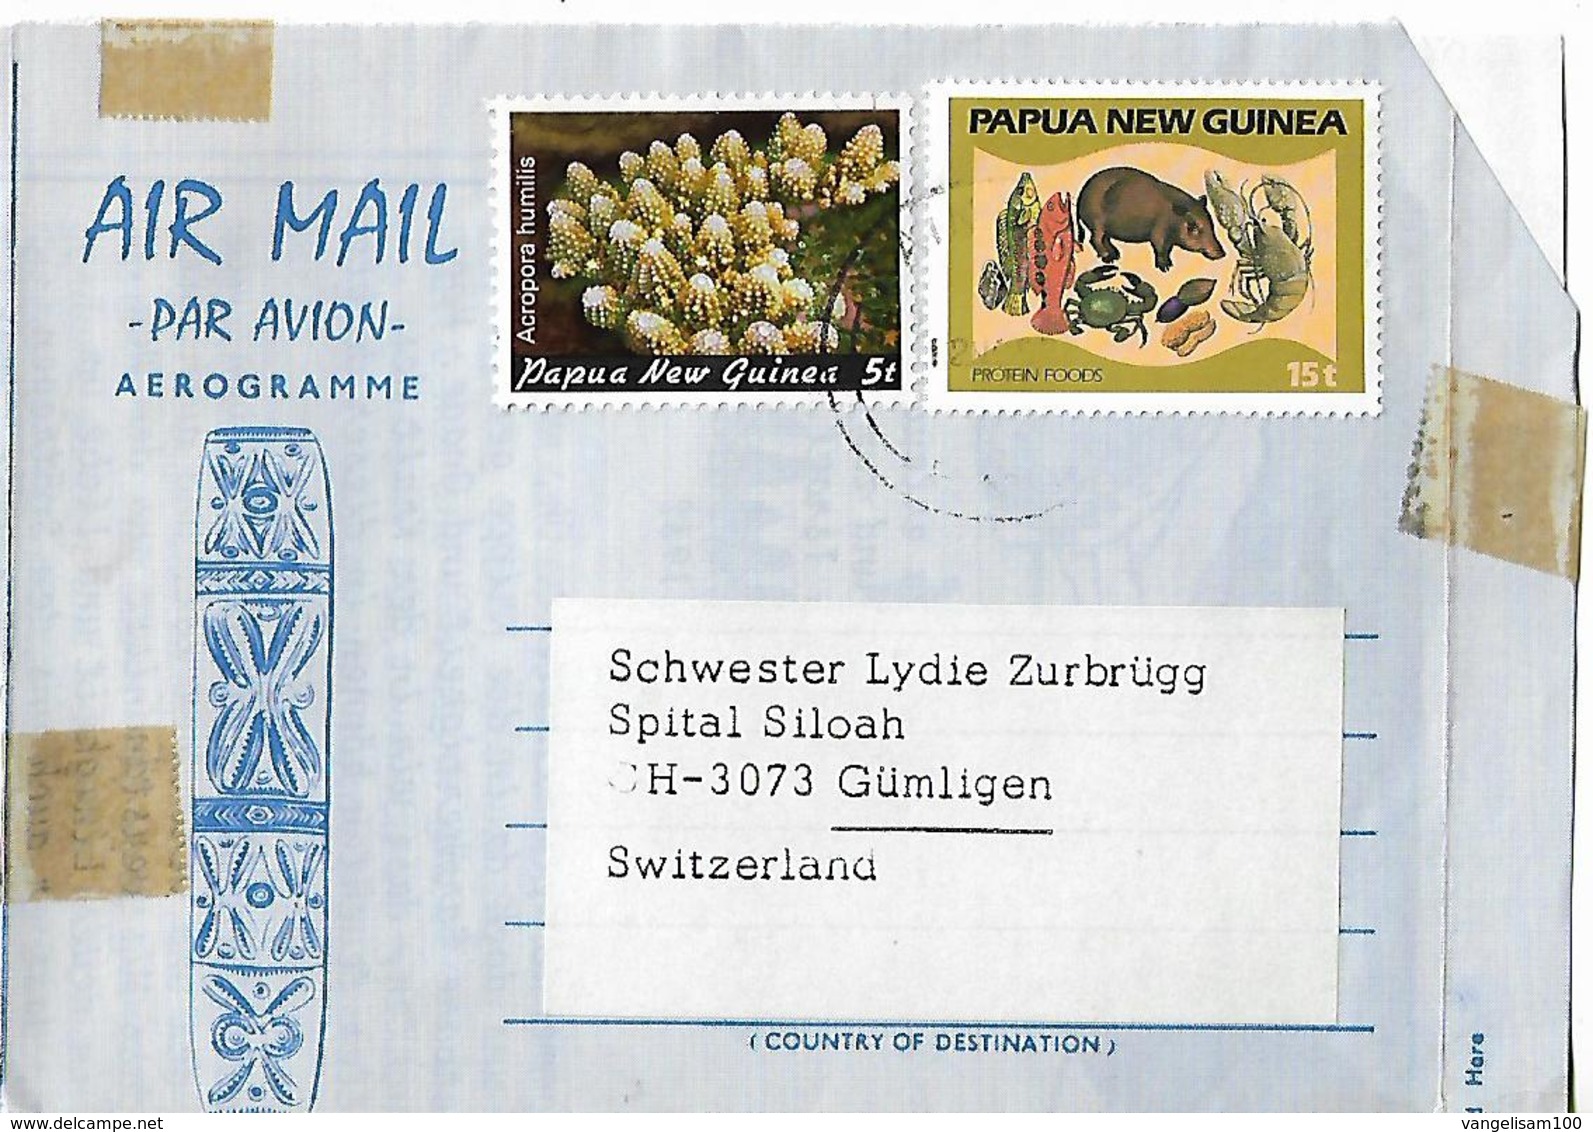 PAPUA NEW GUINEA 1984 AEROGRAMME Sent To Gumligen 2 Stamps AEROGRAMME USED - Papua New Guinea